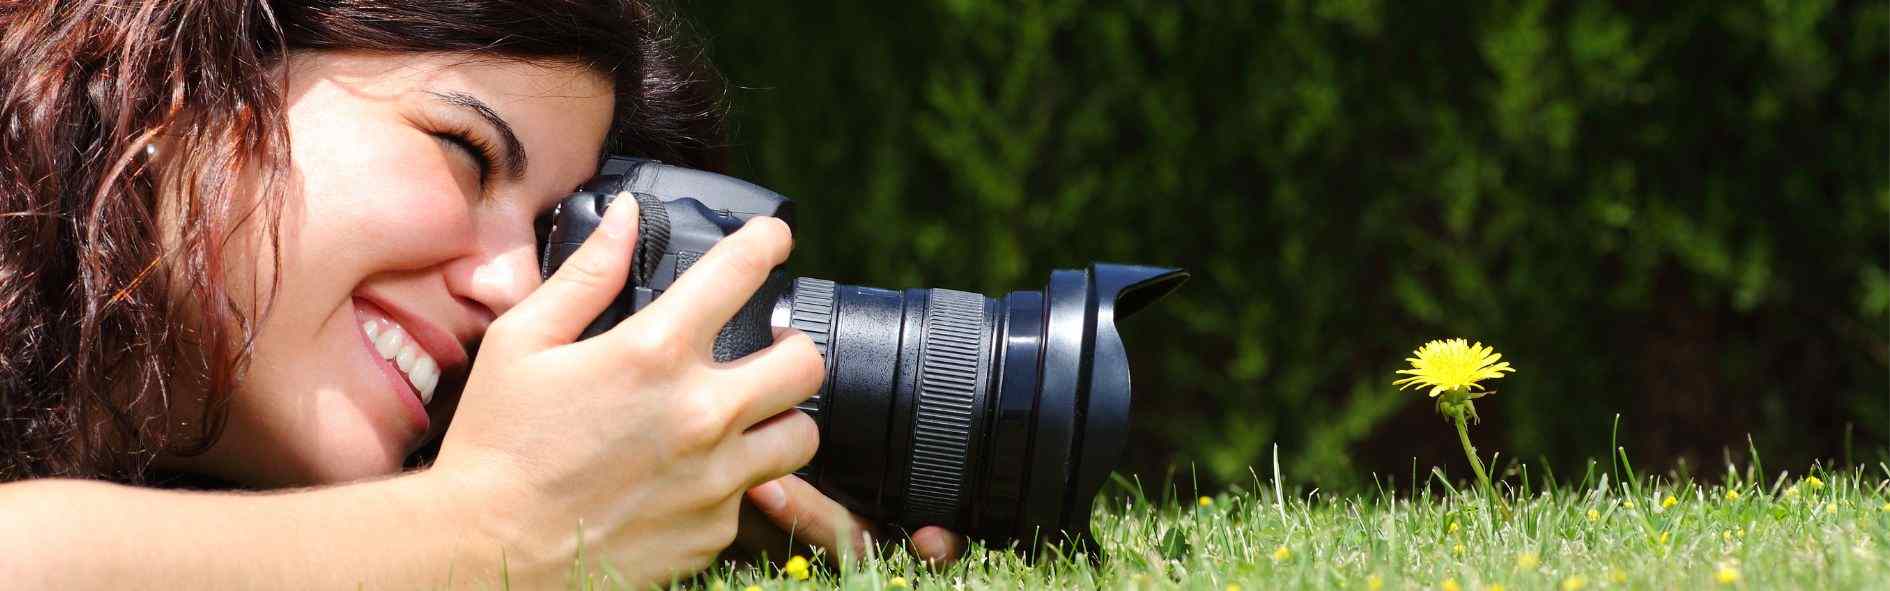 Estudiar fotografia te formará para ser un experto del sector